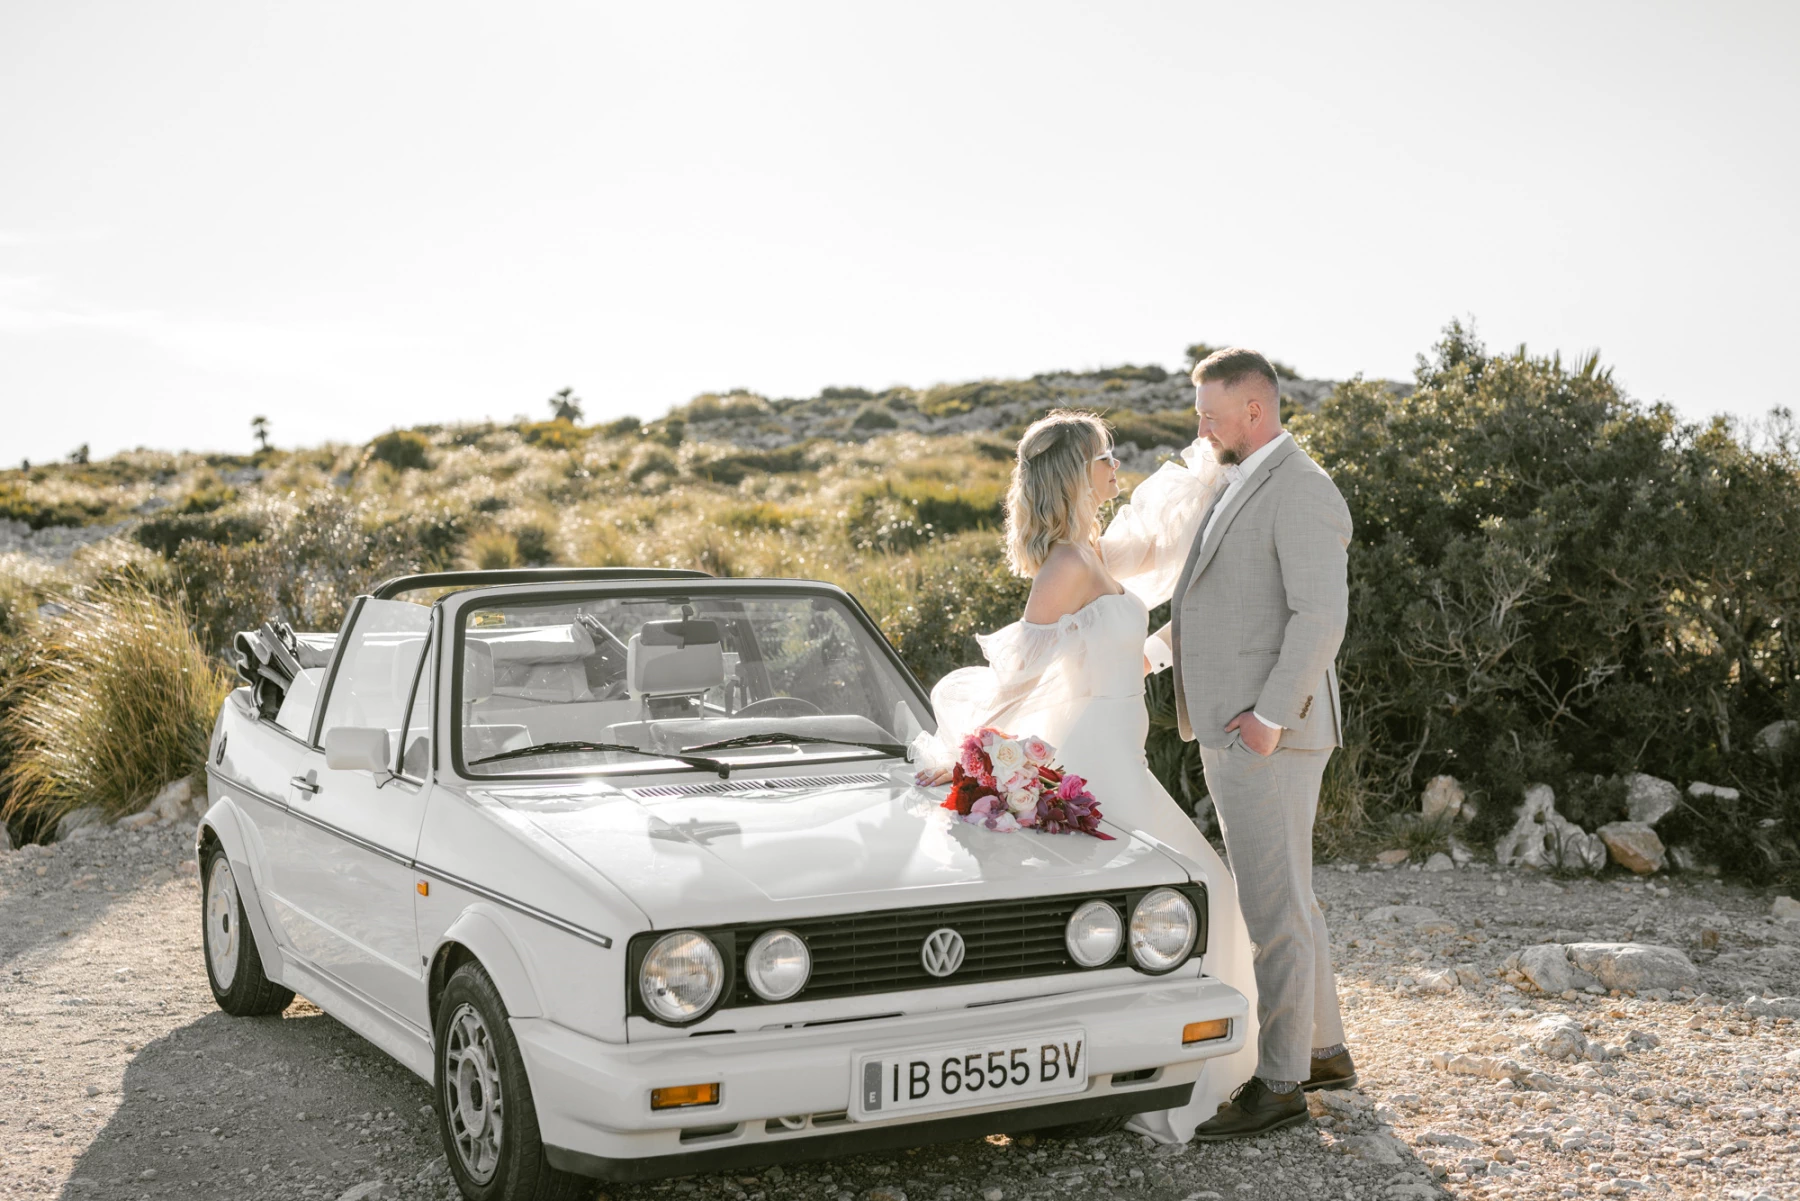 Wedding photographer Mallorca - capturing emotions